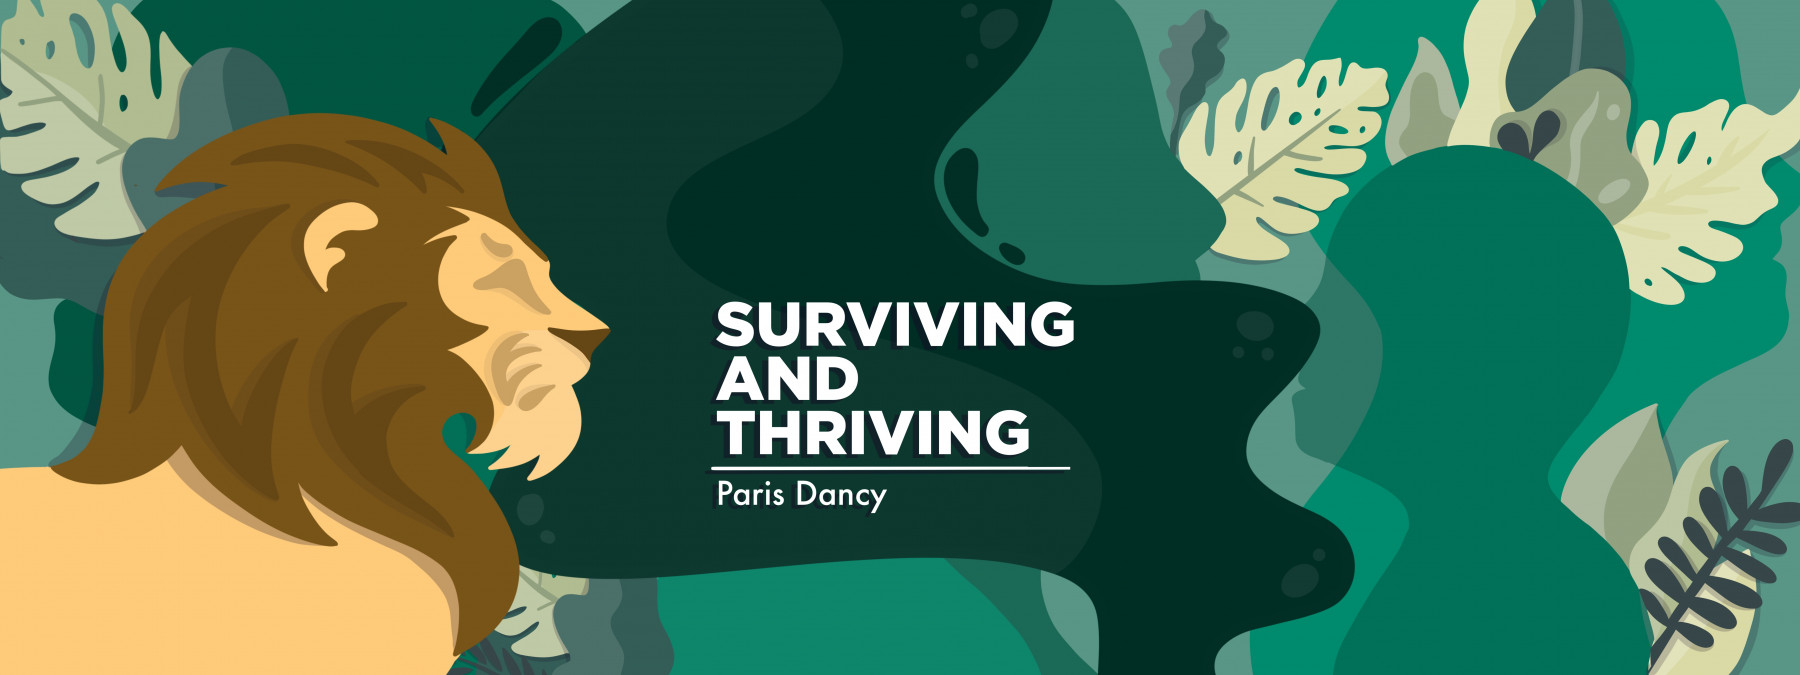 finding purpose | Cushing's Disease News | banner image for Paris Dancy's 